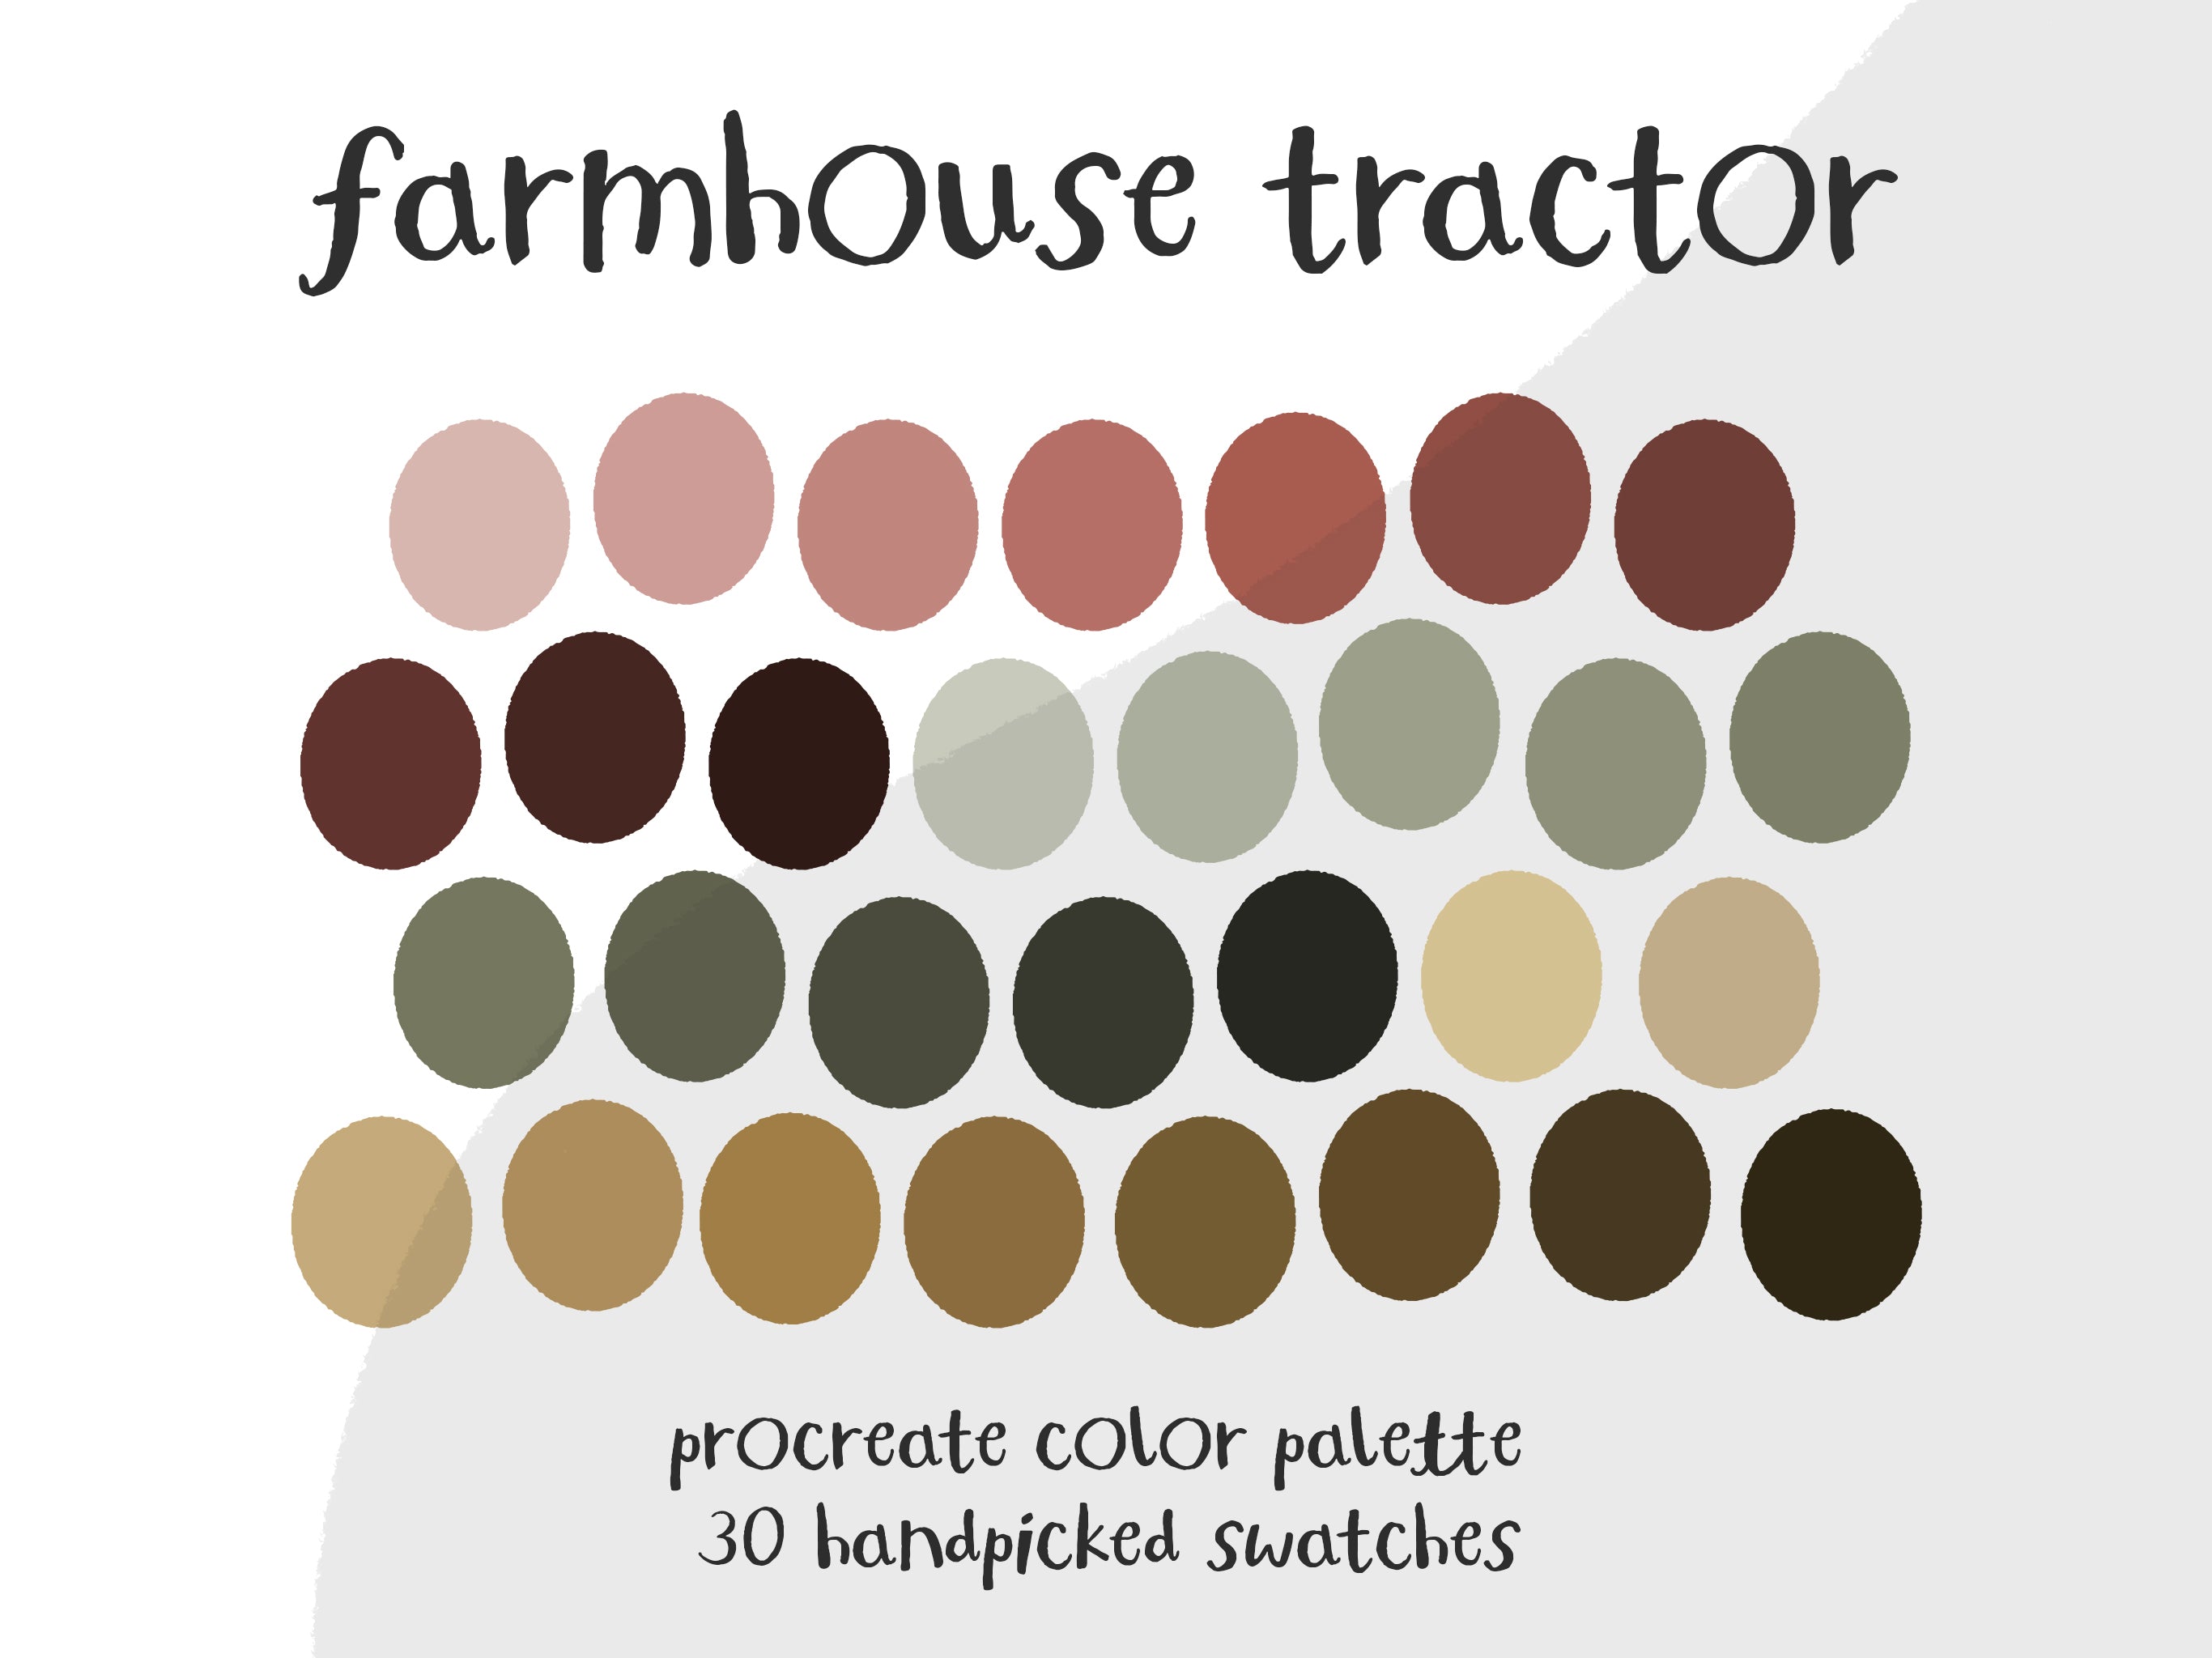 Farmhouse Tractor